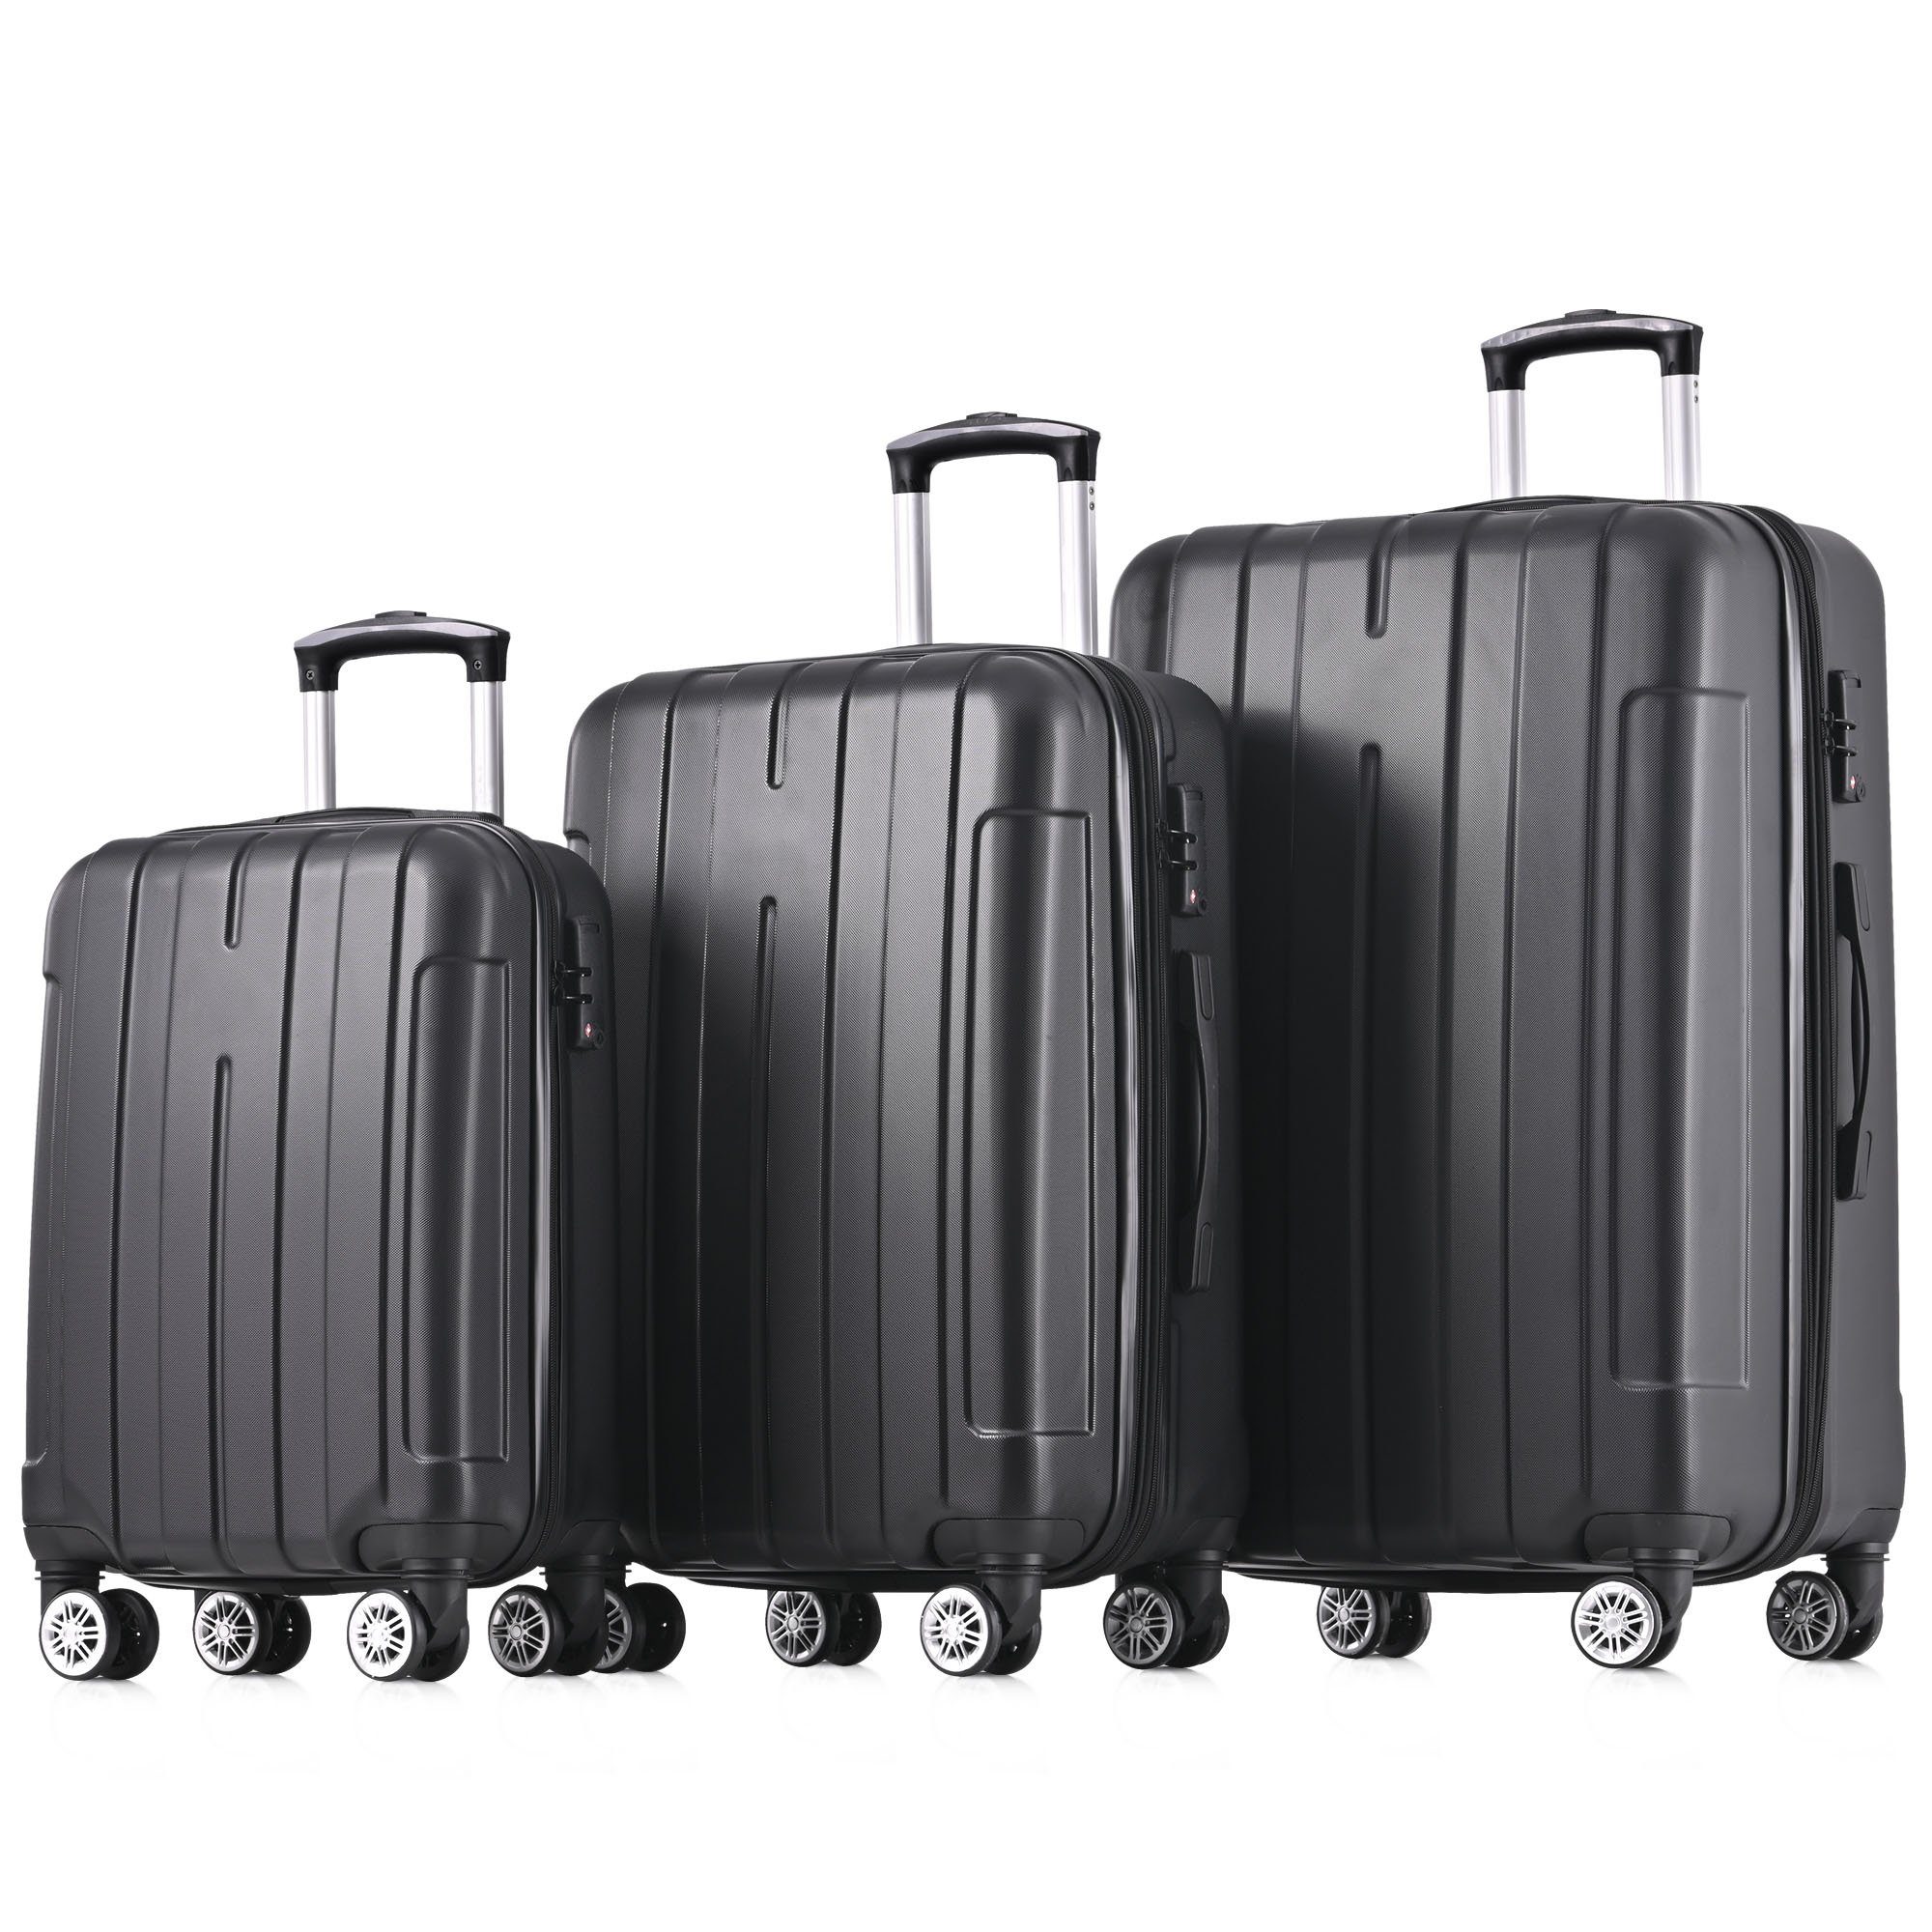 schwarz M-L-XL-Set, viele Odikalo TSA-Schloss, Universalrad, Handgepäck, Farbe Handgepäckkoffer